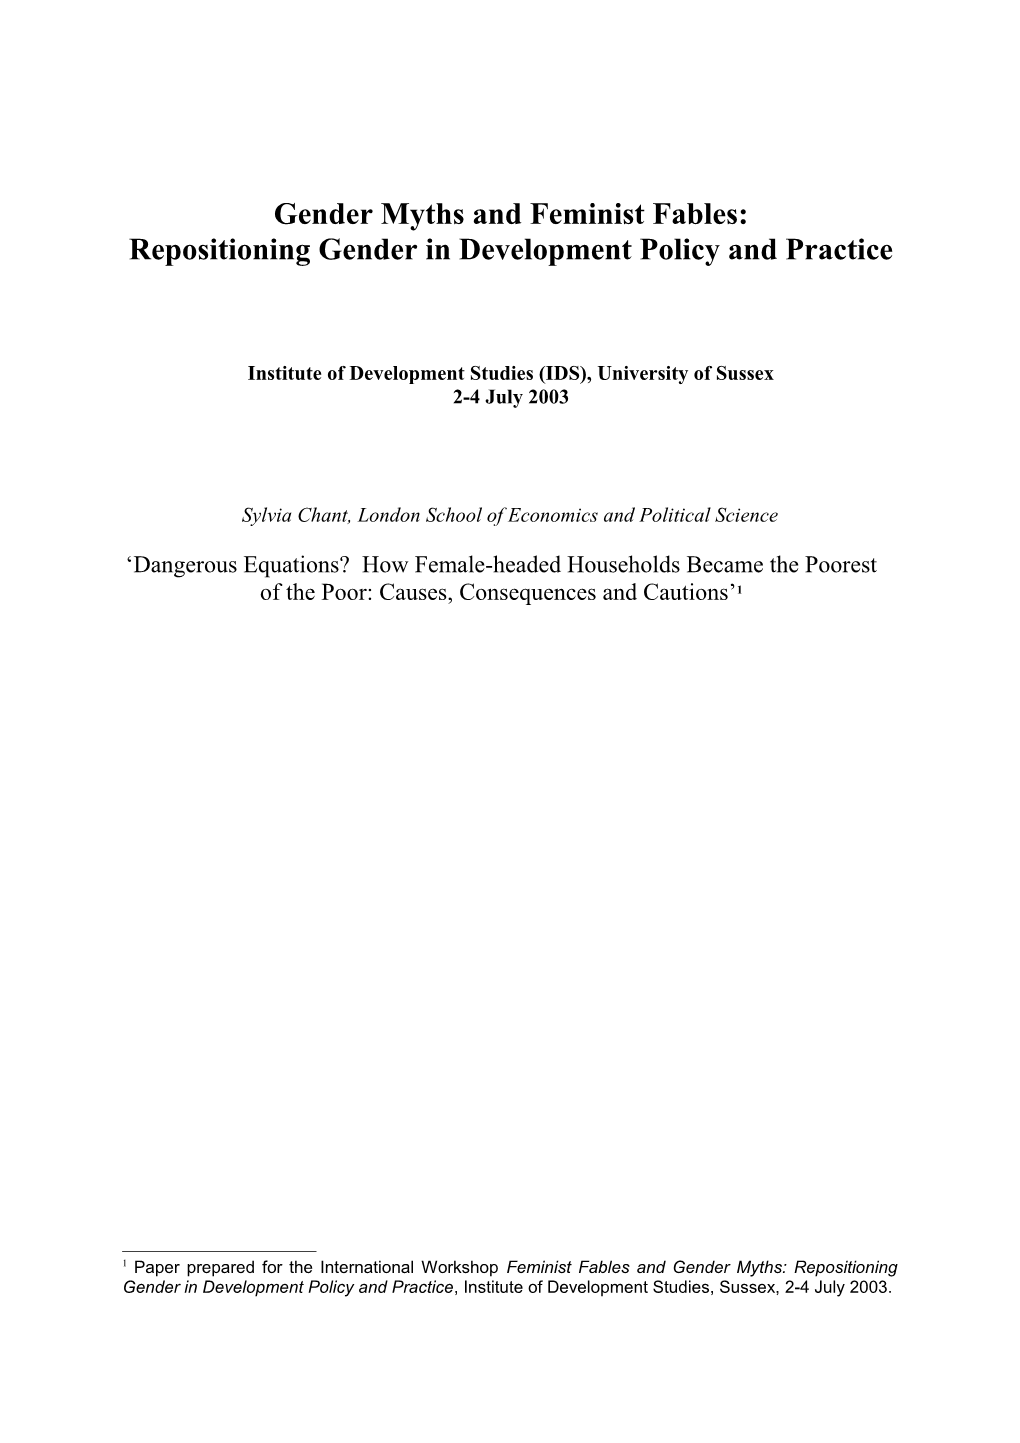 Paper Prepared for International Workshop: Feminist Fables and Gender Myths: Repositioning